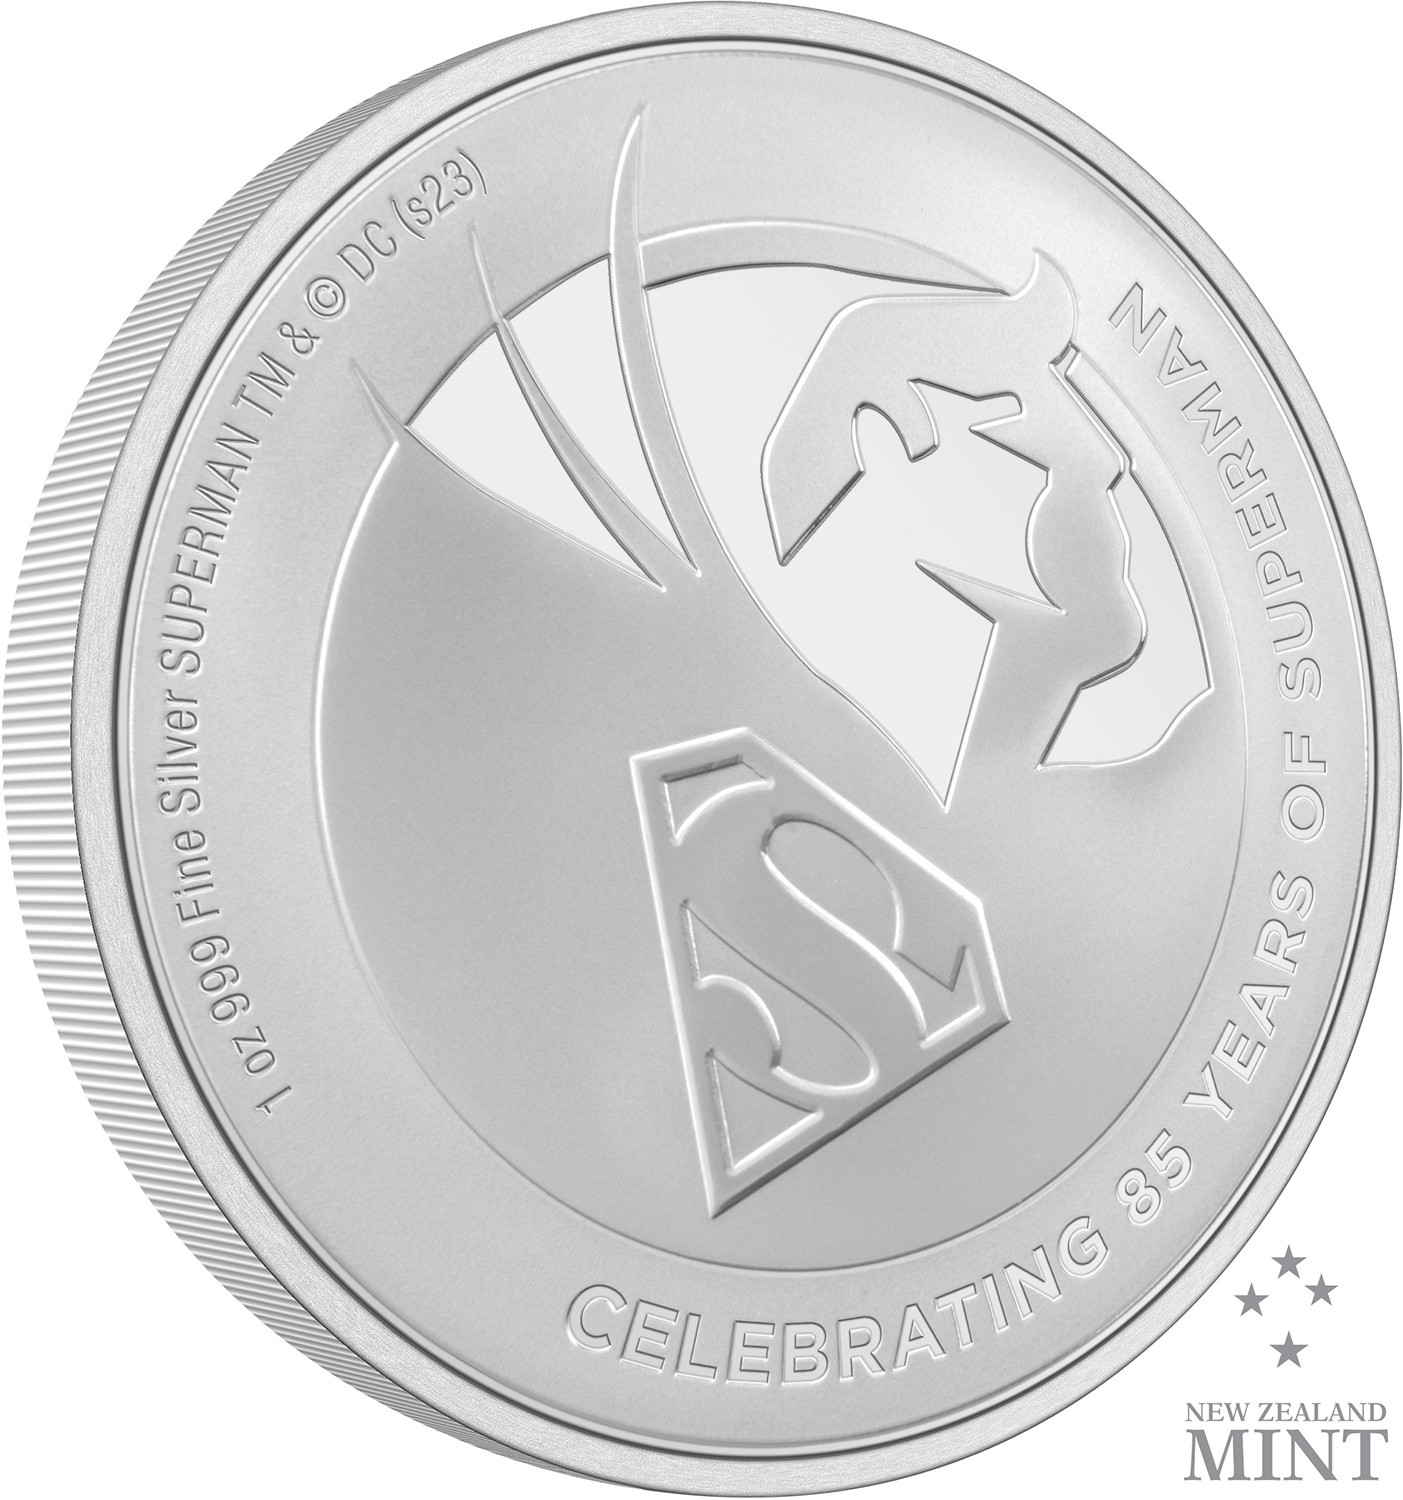 Superman 85th Anniversary 1oz Silver Coin- Prototype Shown